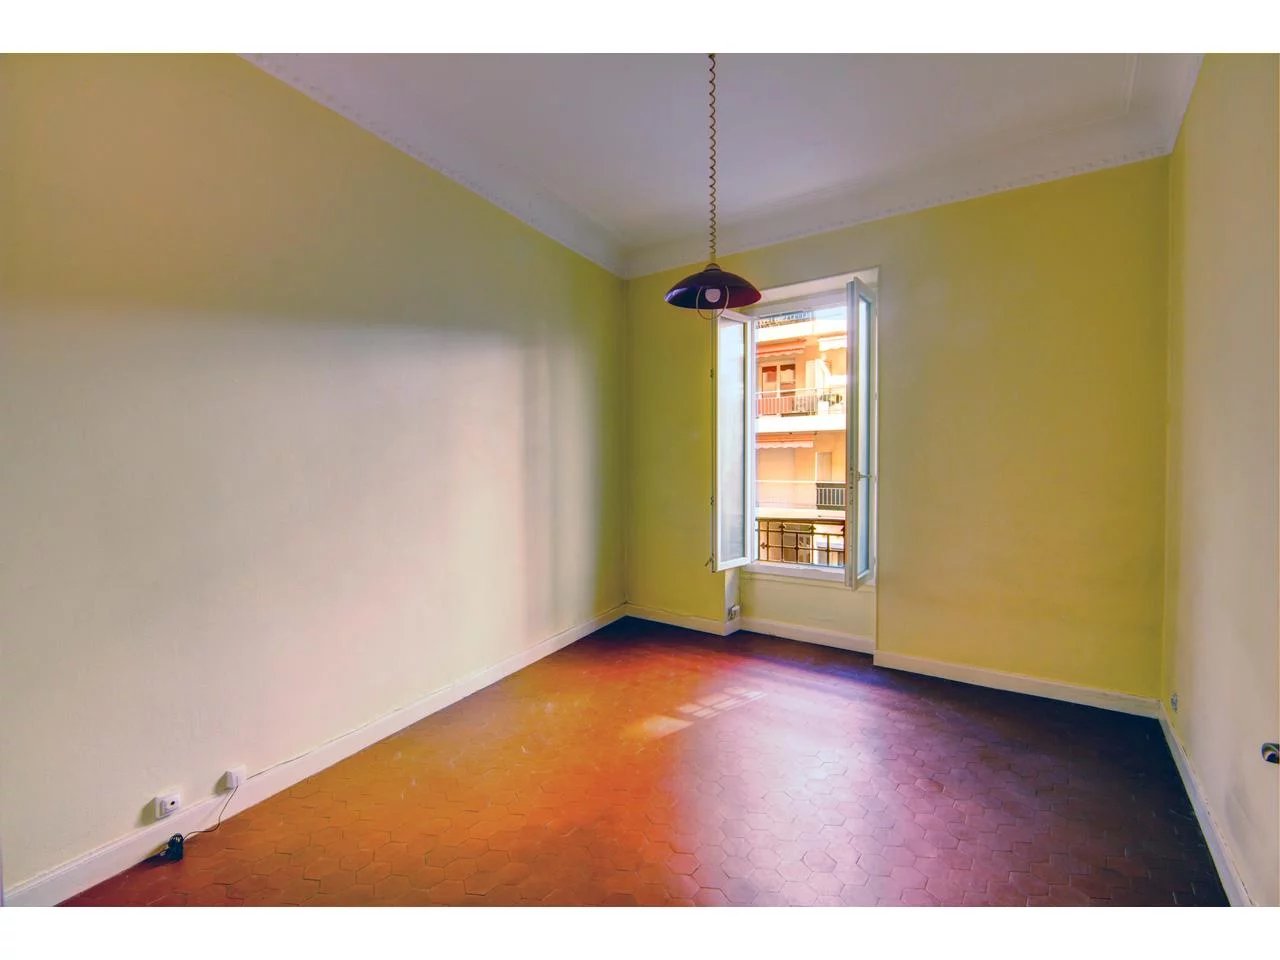 Appartement  2 Locali 48.77m2  In vendita   139 000 €